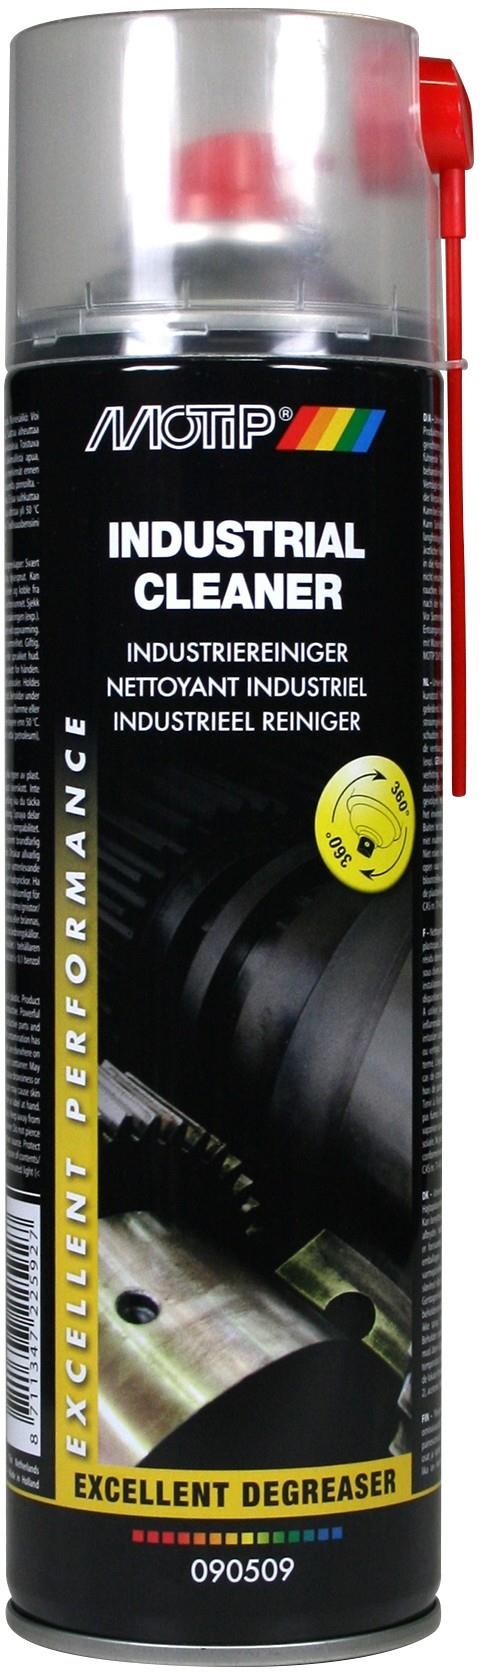 Nettoyant industriel Motip spray 500ml_4290.jpg